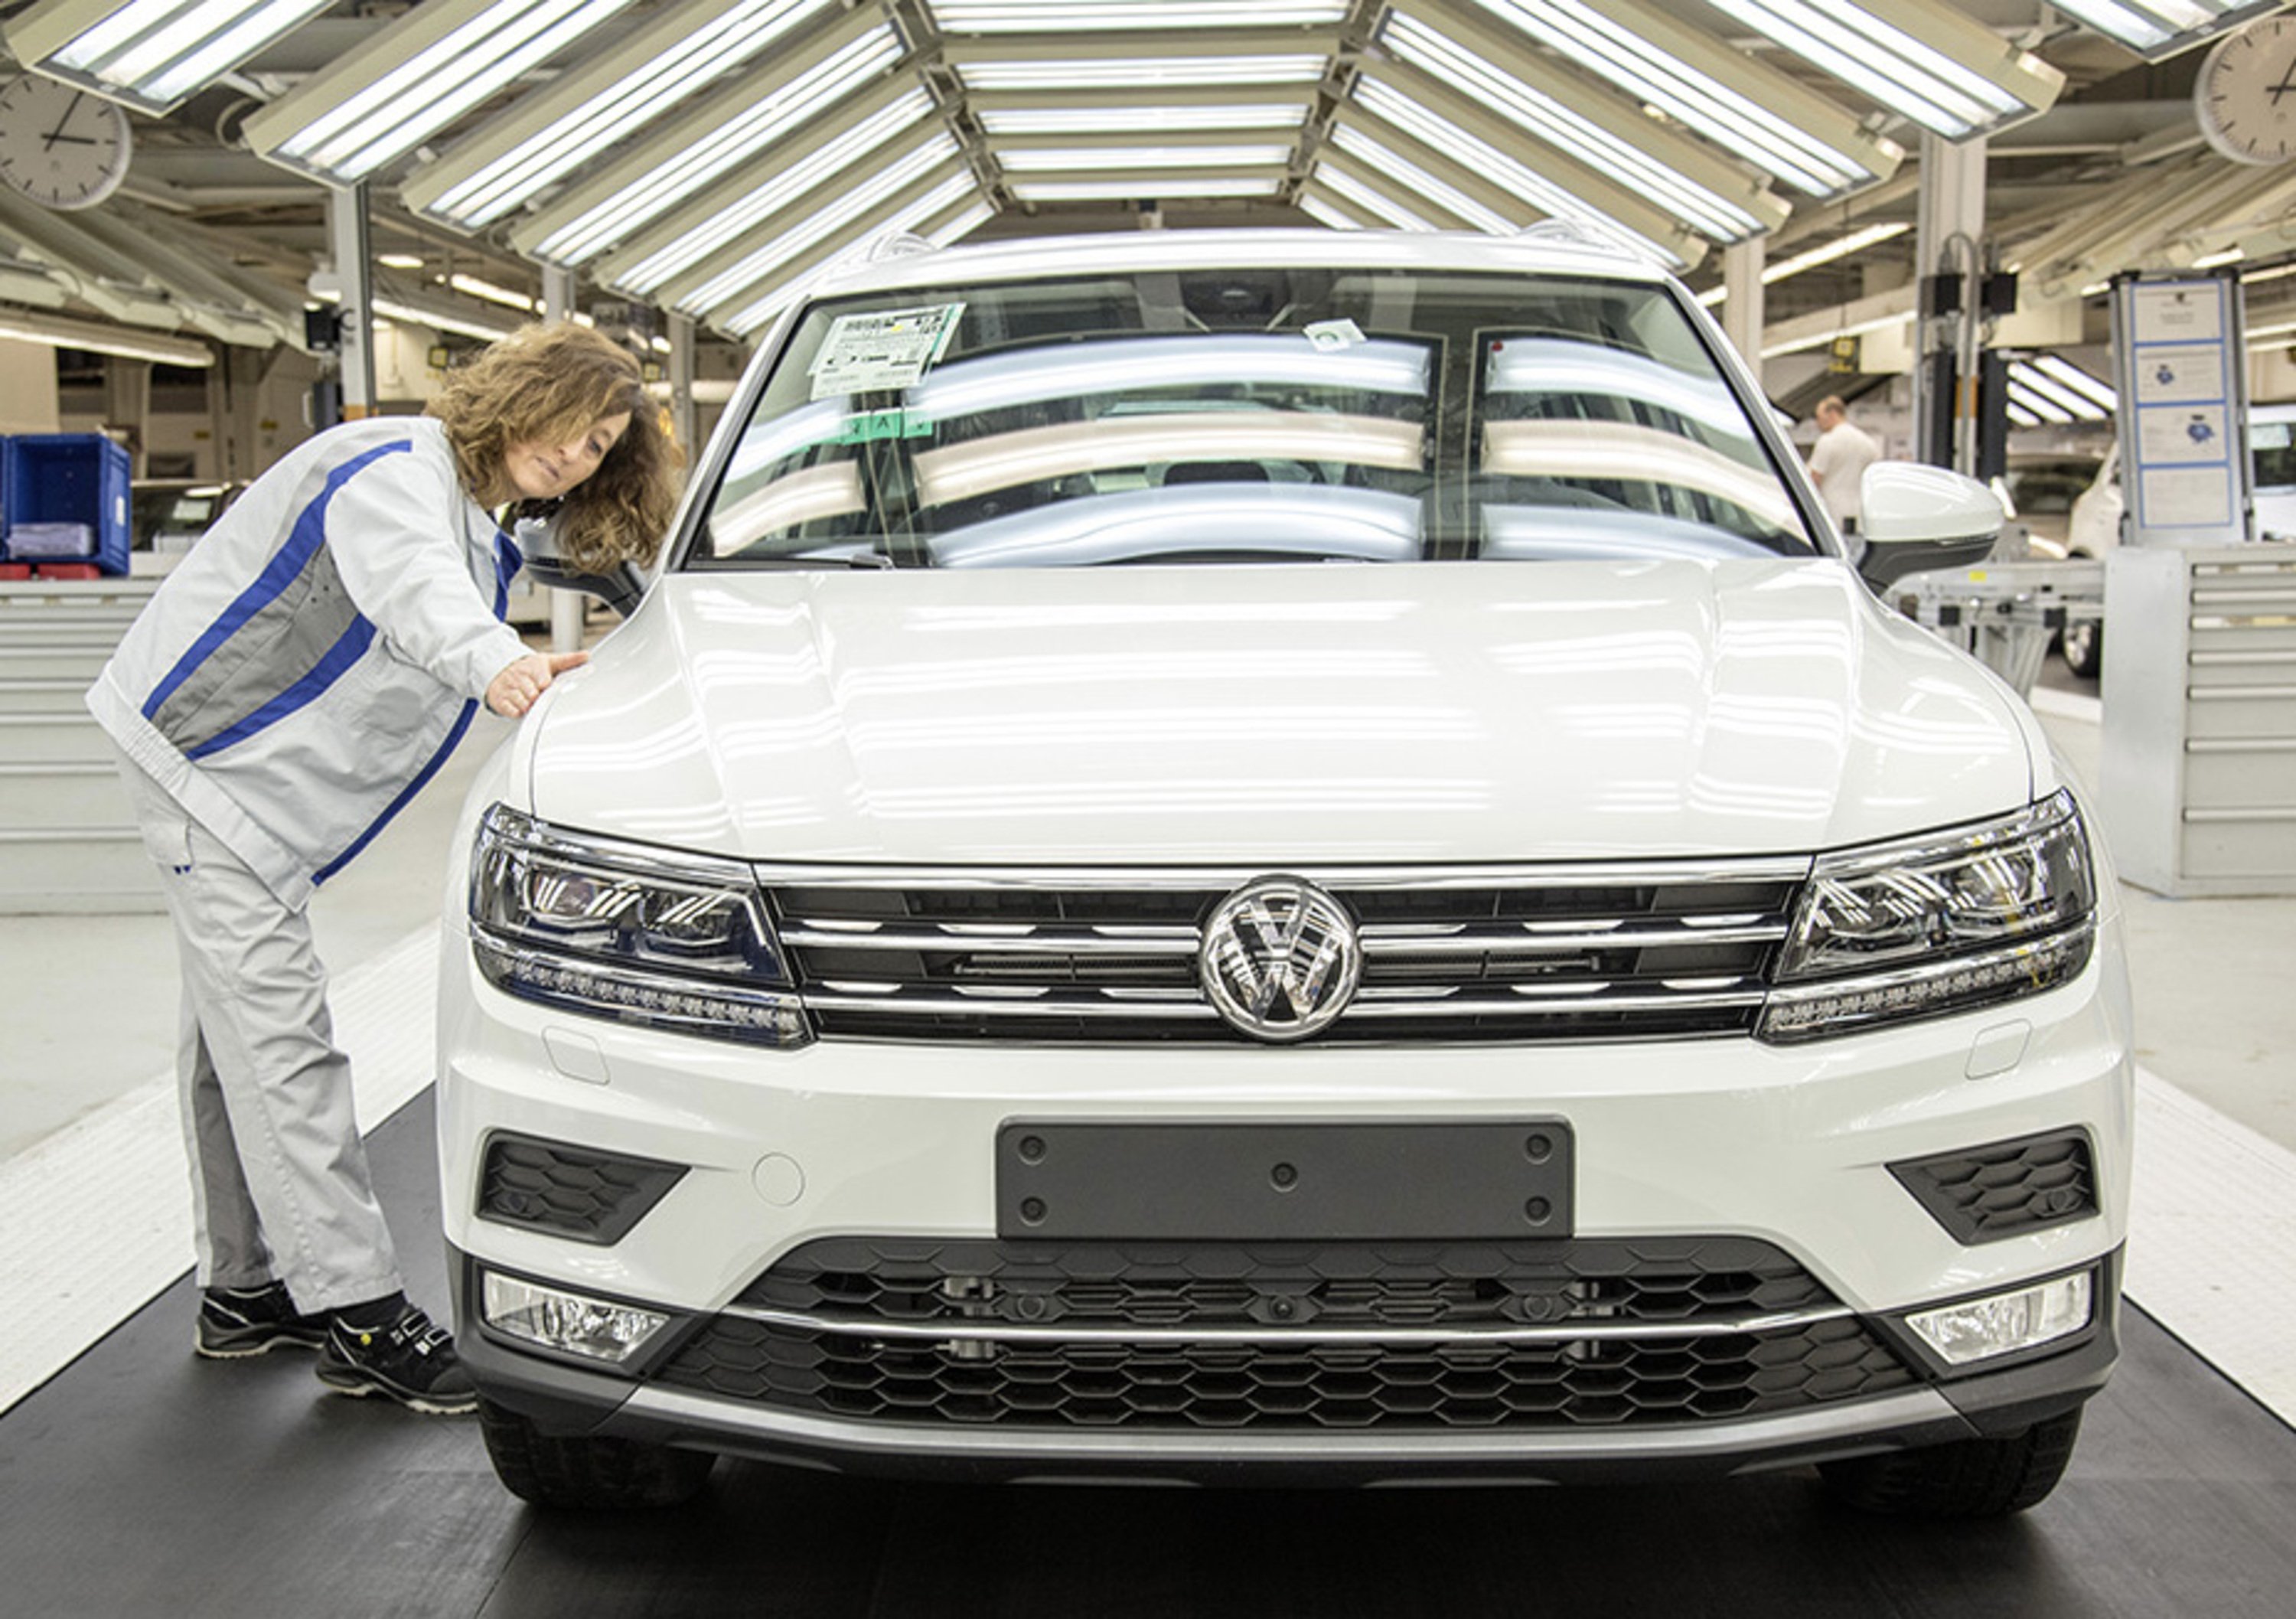 Test su animali: Volkswagen conclude prima fase indagine interna